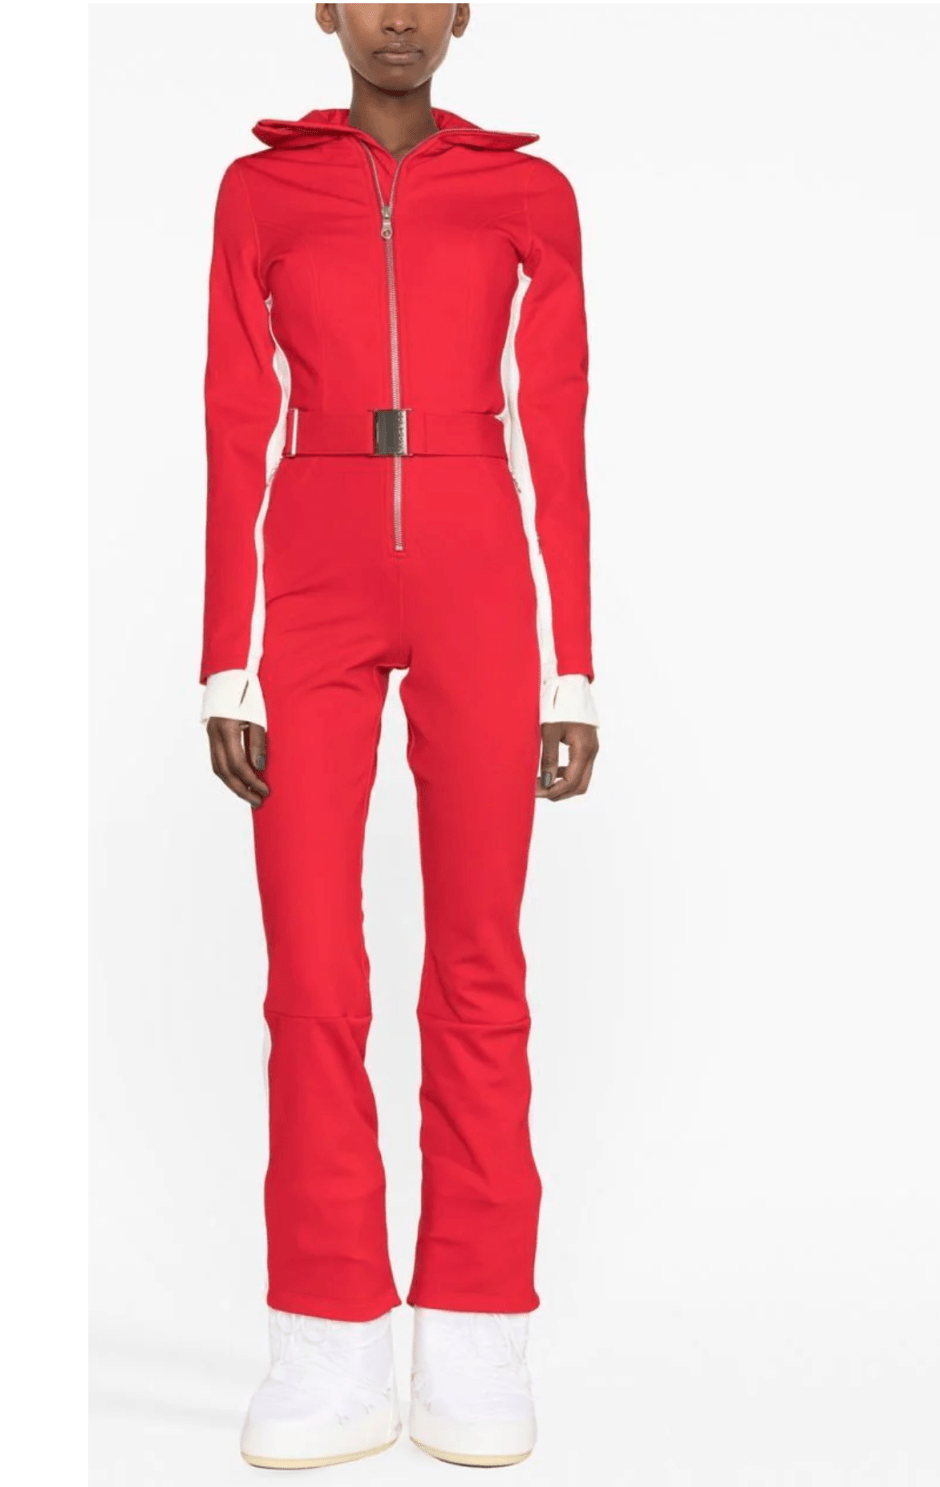 Cordova Red Ski Suit